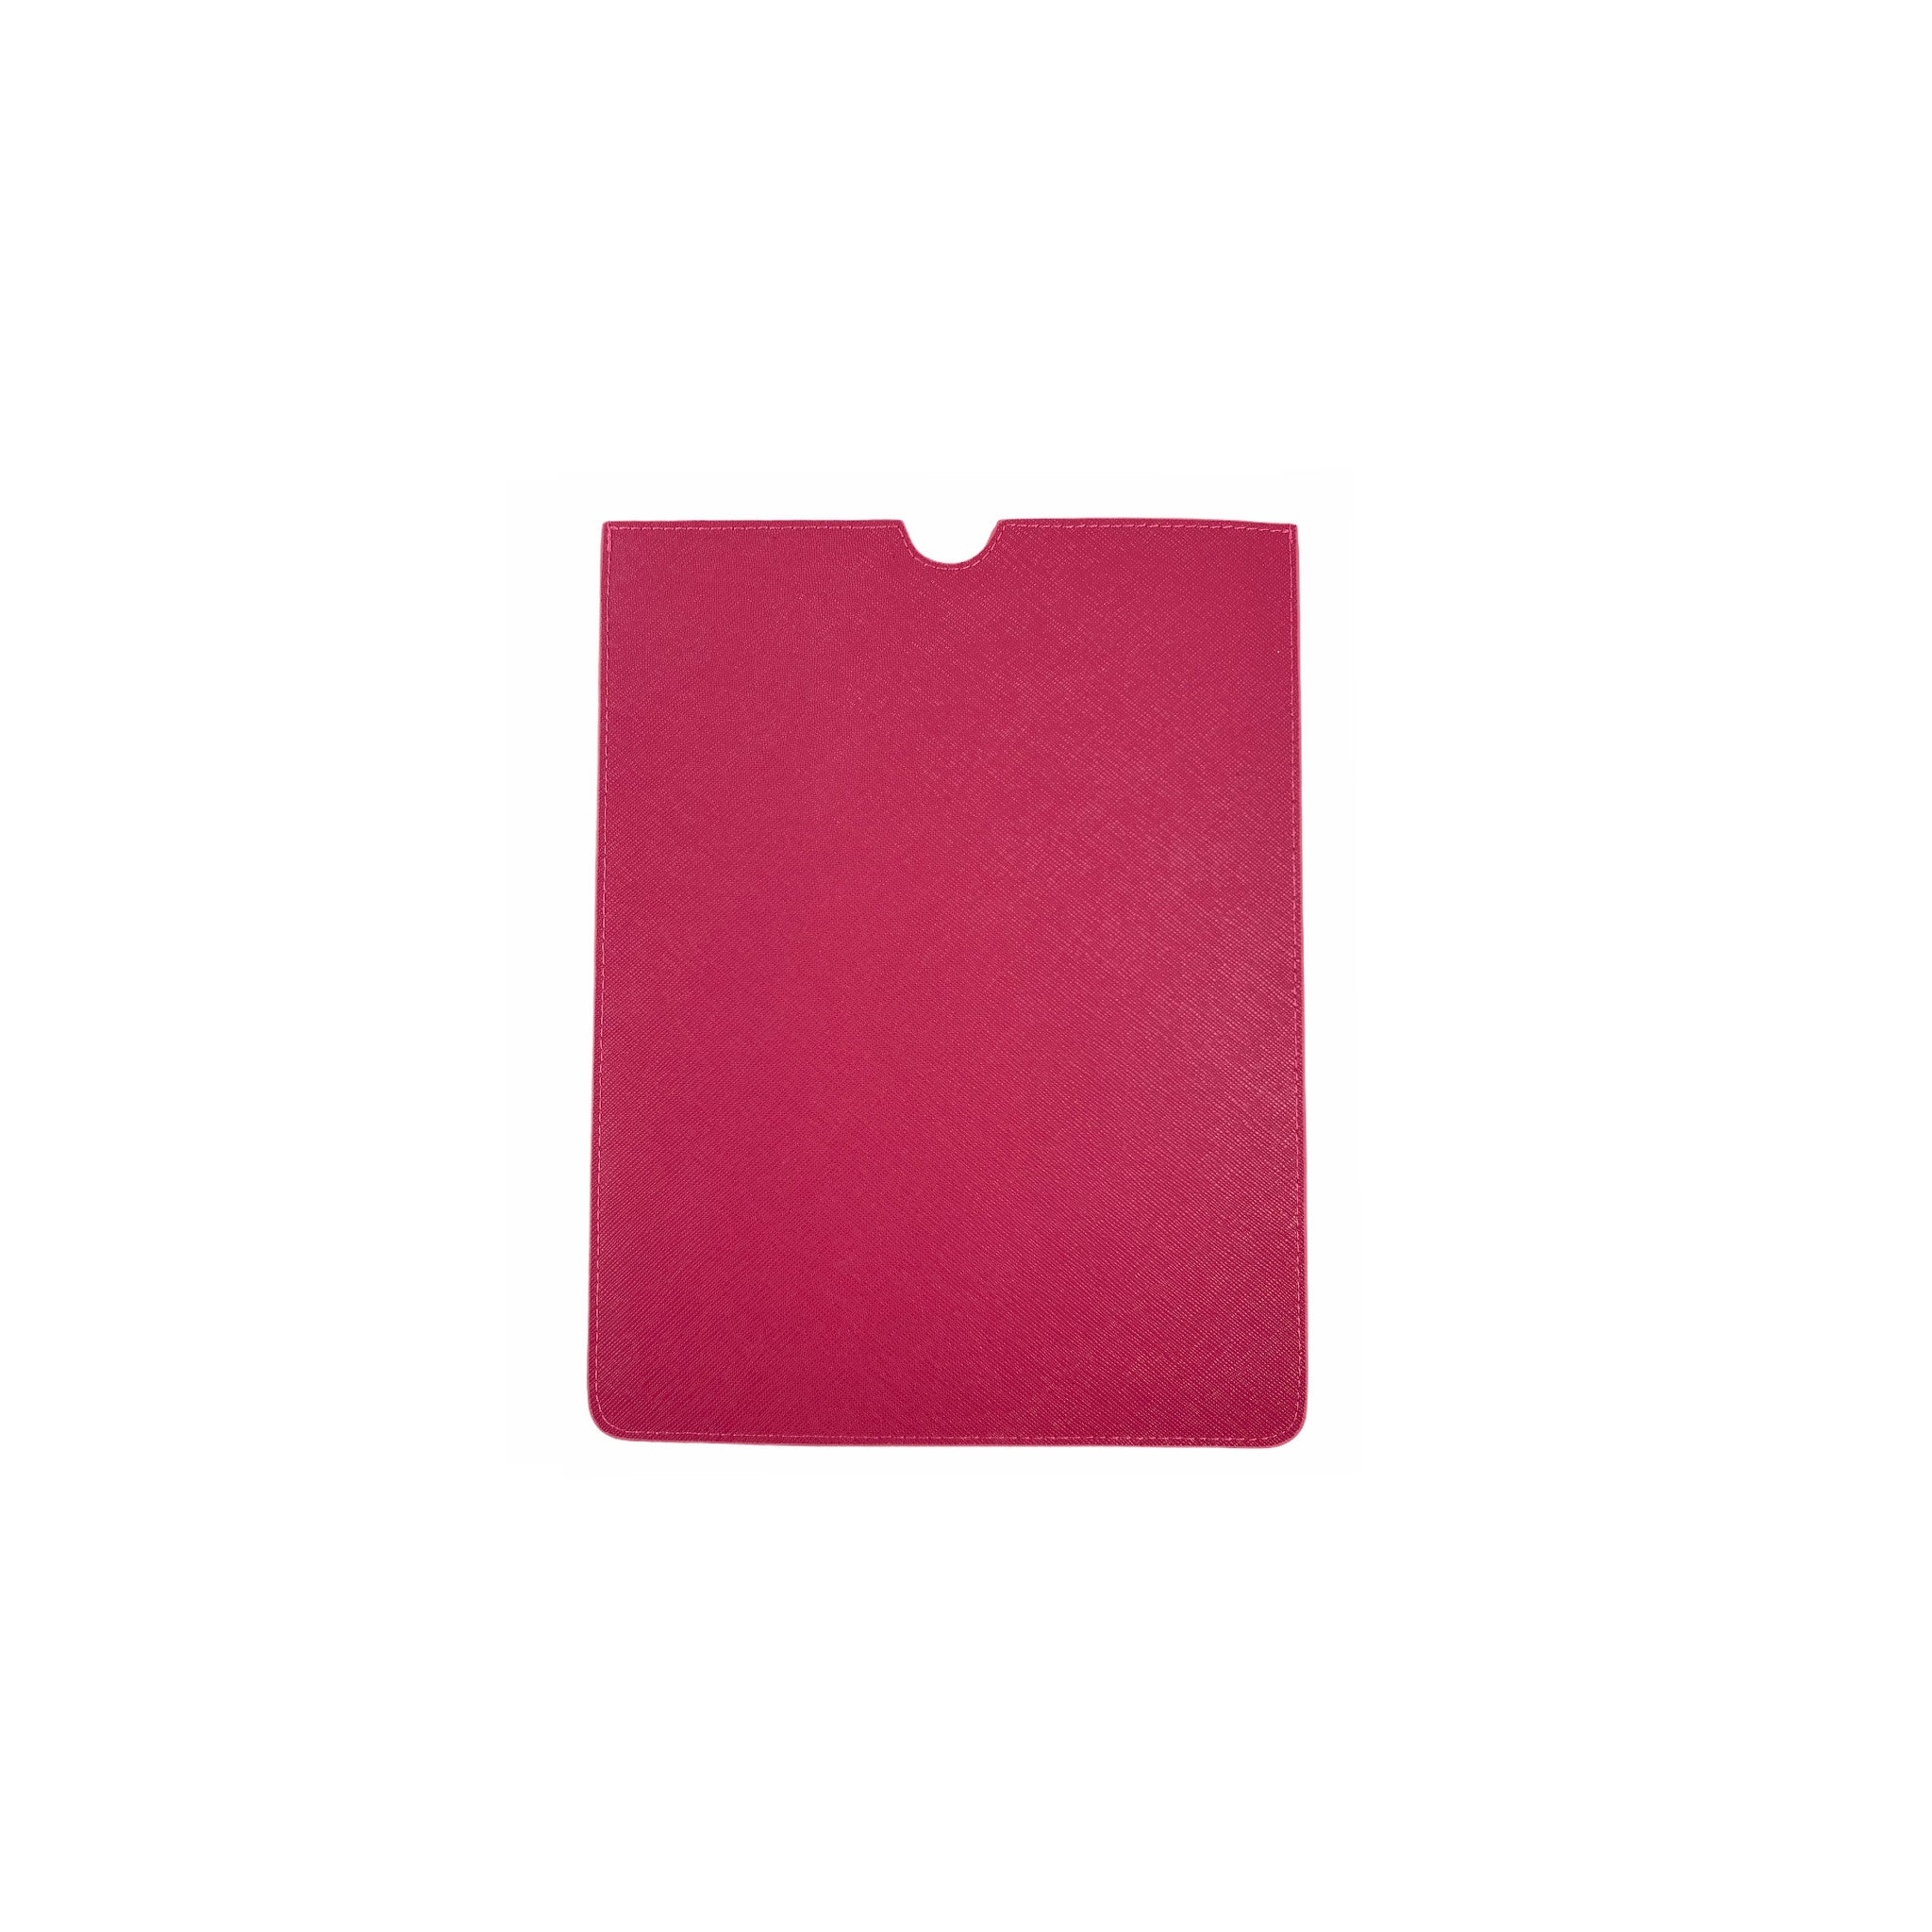 Personalised iPad Sleeve - Pink Saffiano Leather